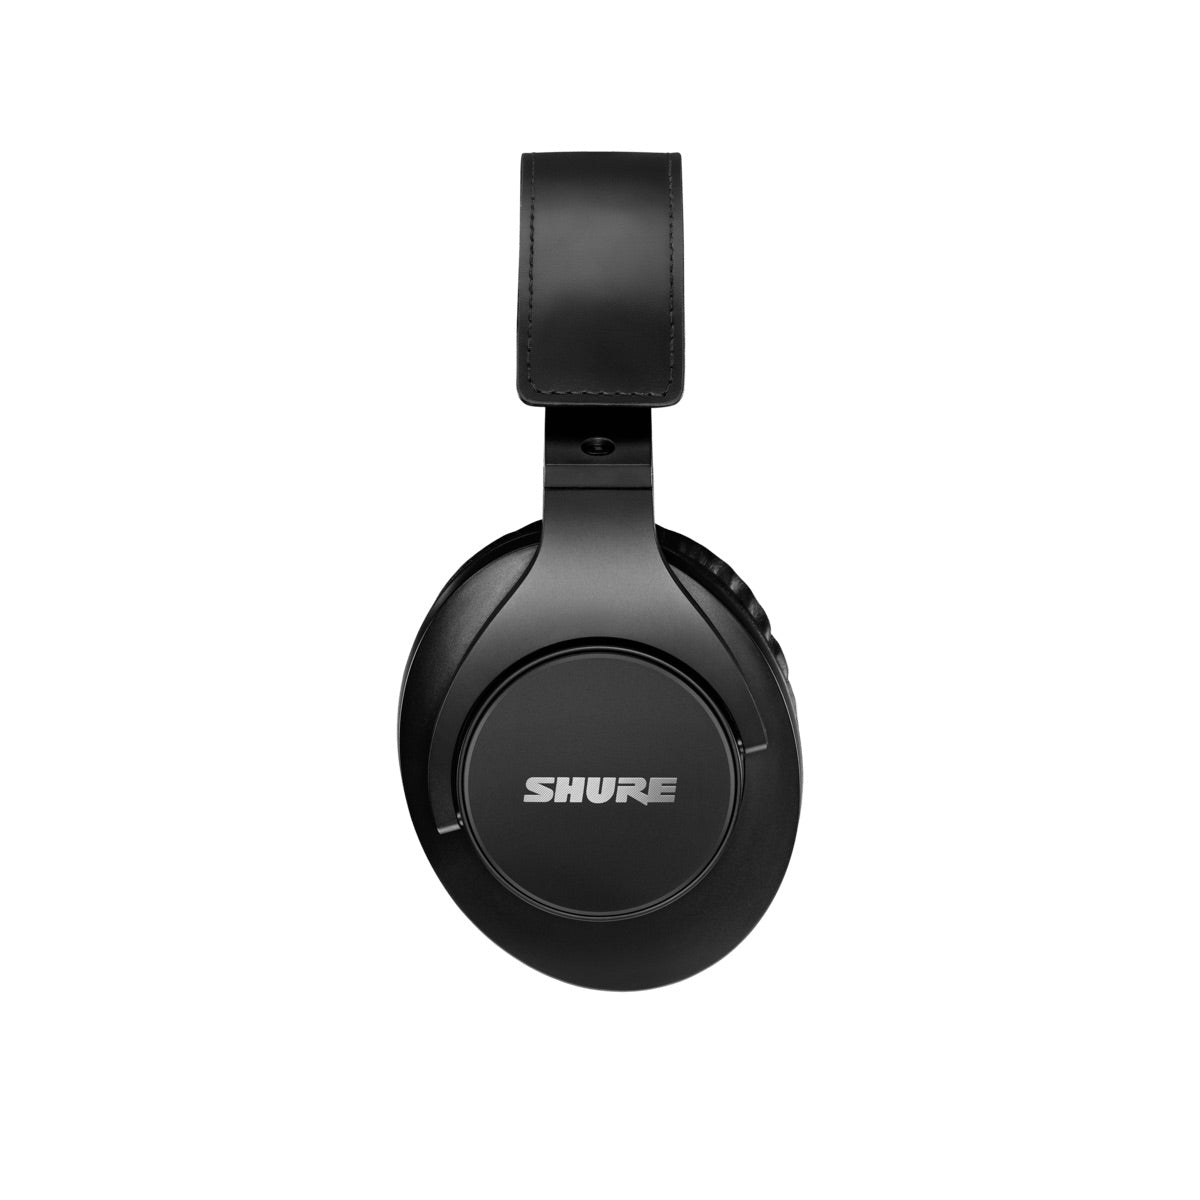 Shure SRH440A - Professional Studio Headphones